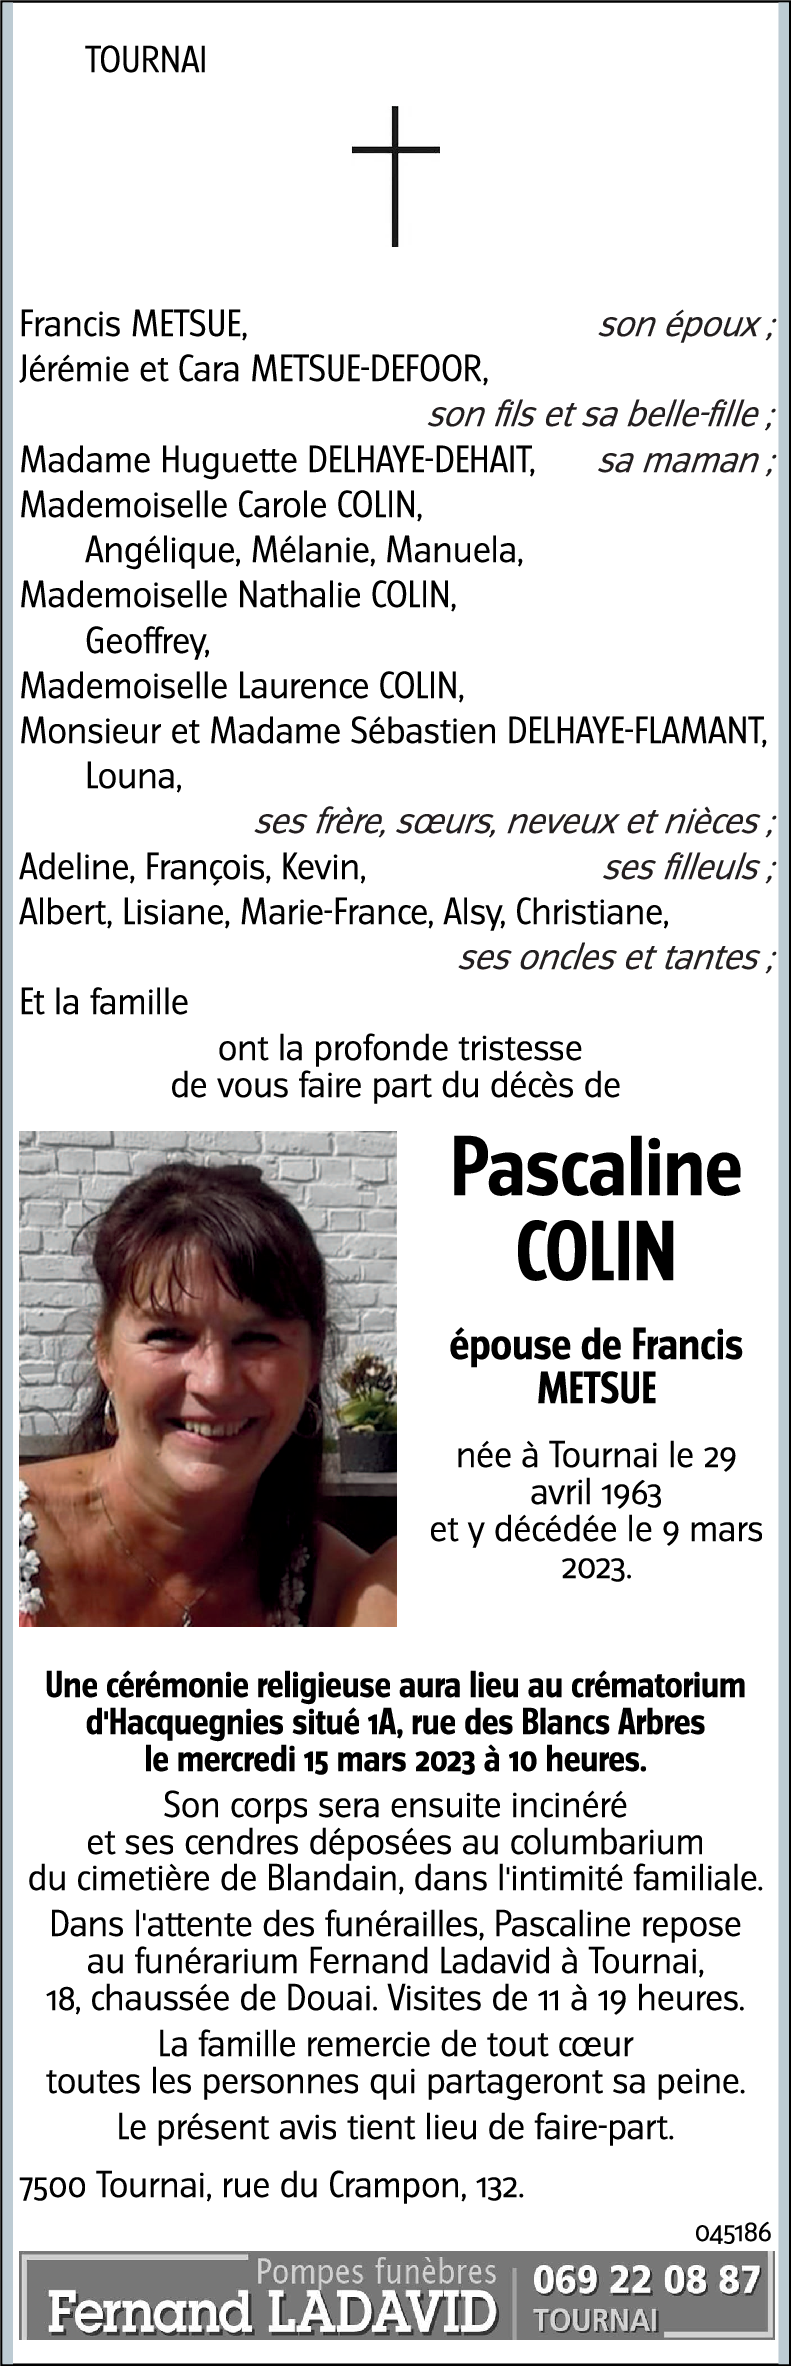 Pascaline COLIN